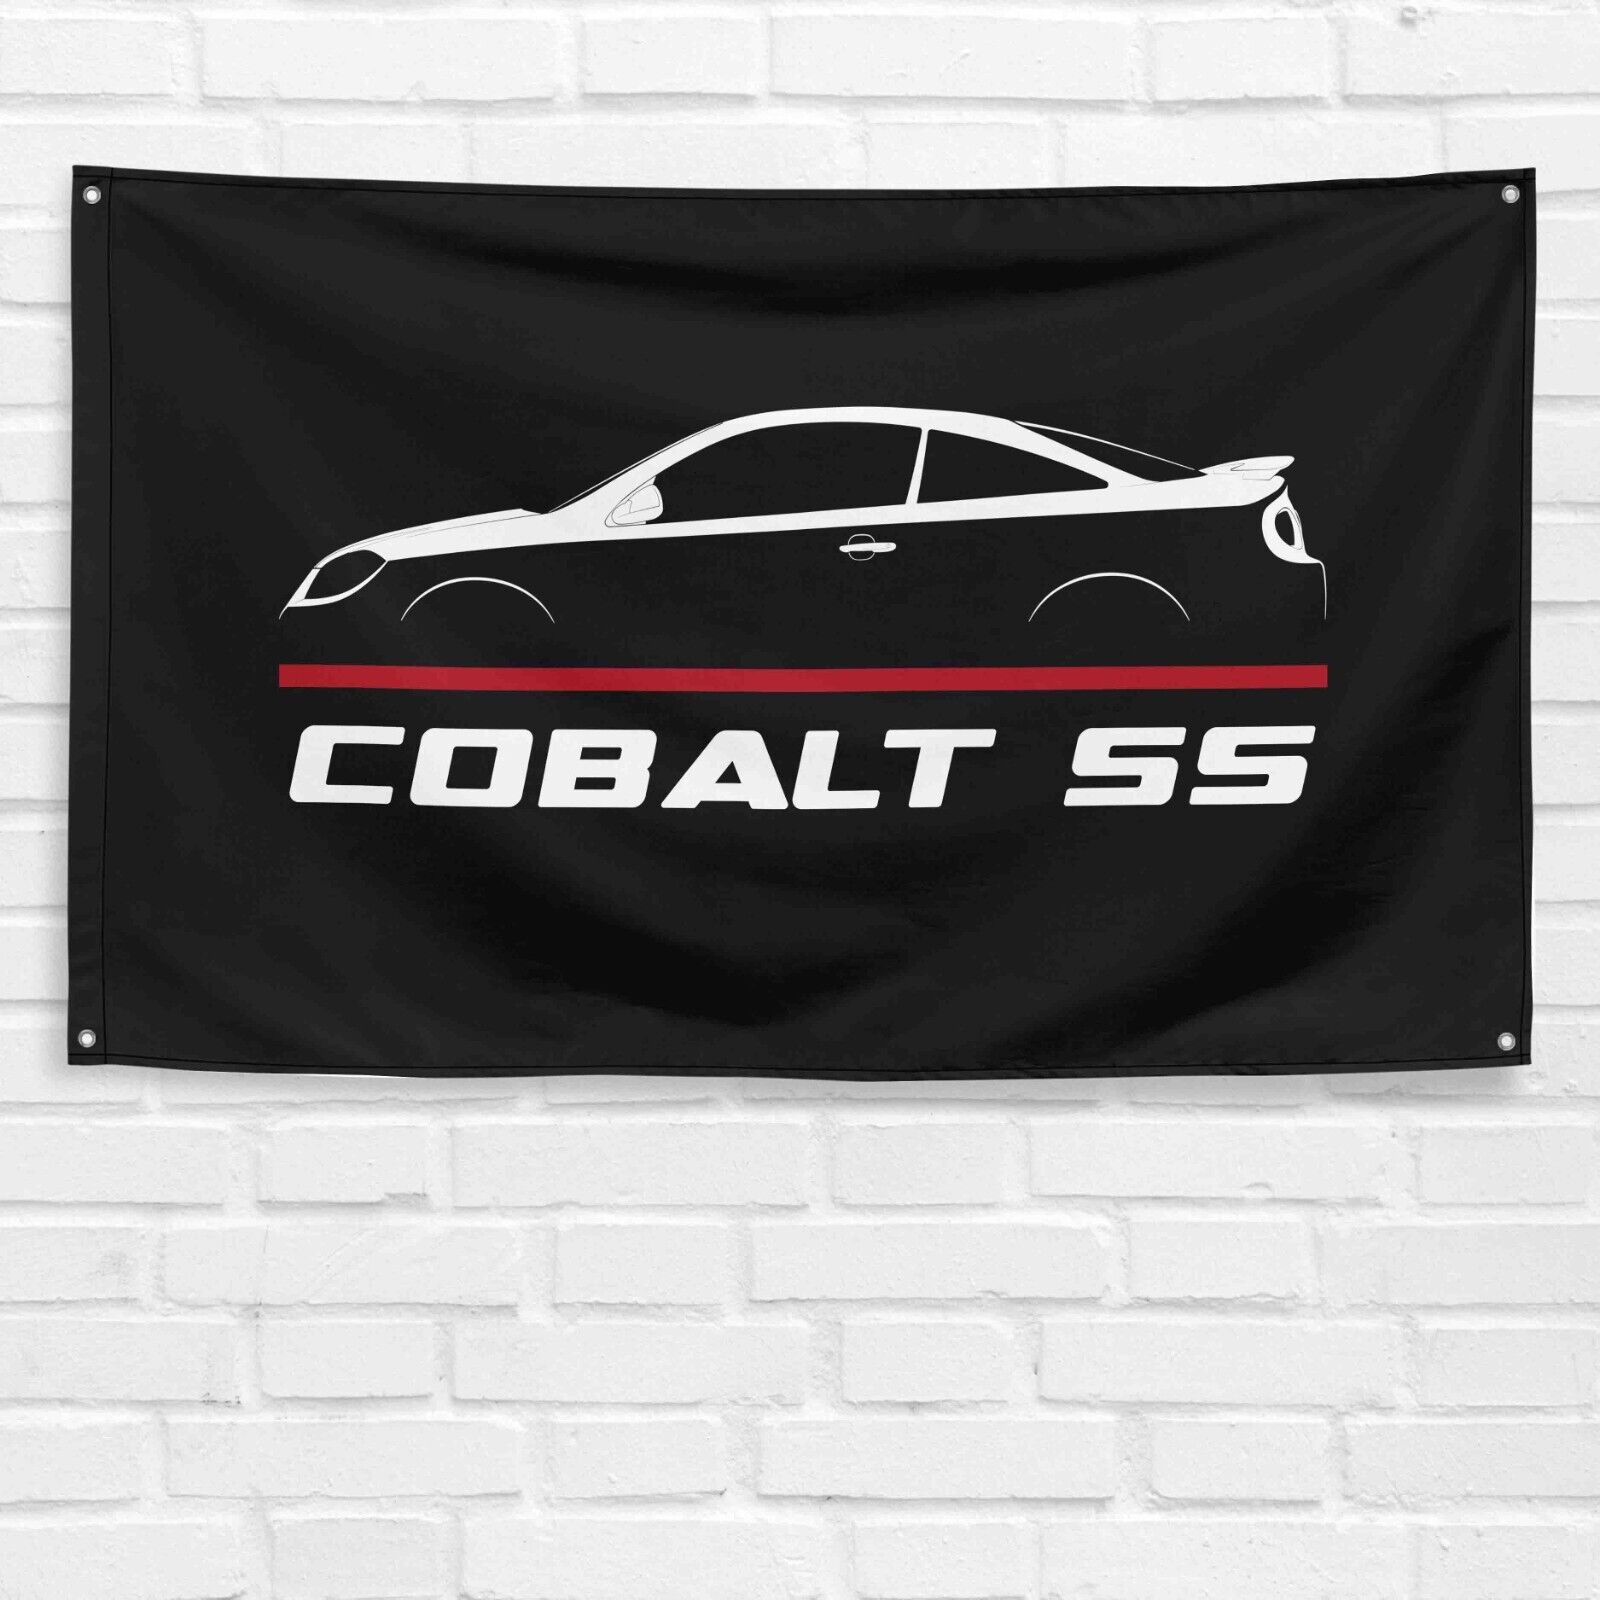 For Chevrolet Cobalt SS 2005-2009 Enthusiast 3x5 ft Flag Banner Birthday Gift